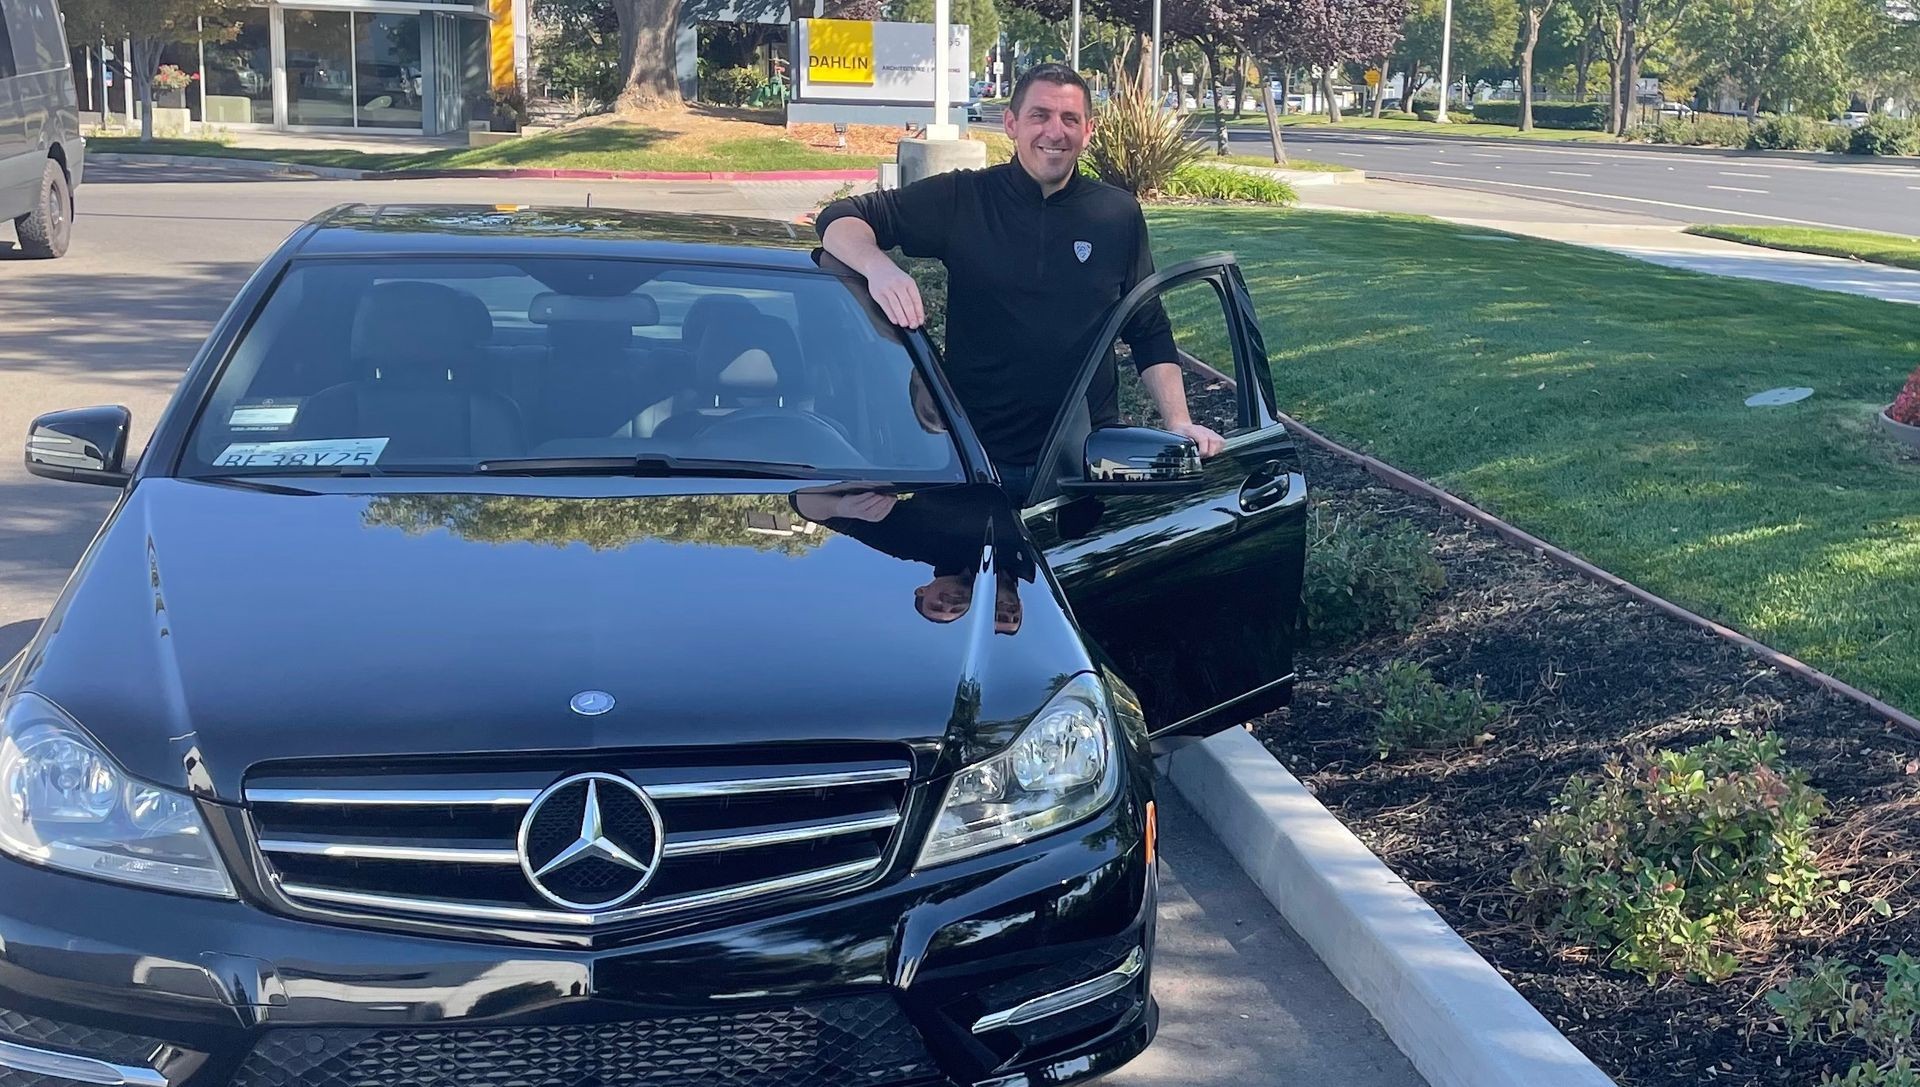 Eagle Star Detail Owner Outside a Black Mercedes Benz after detailing the car